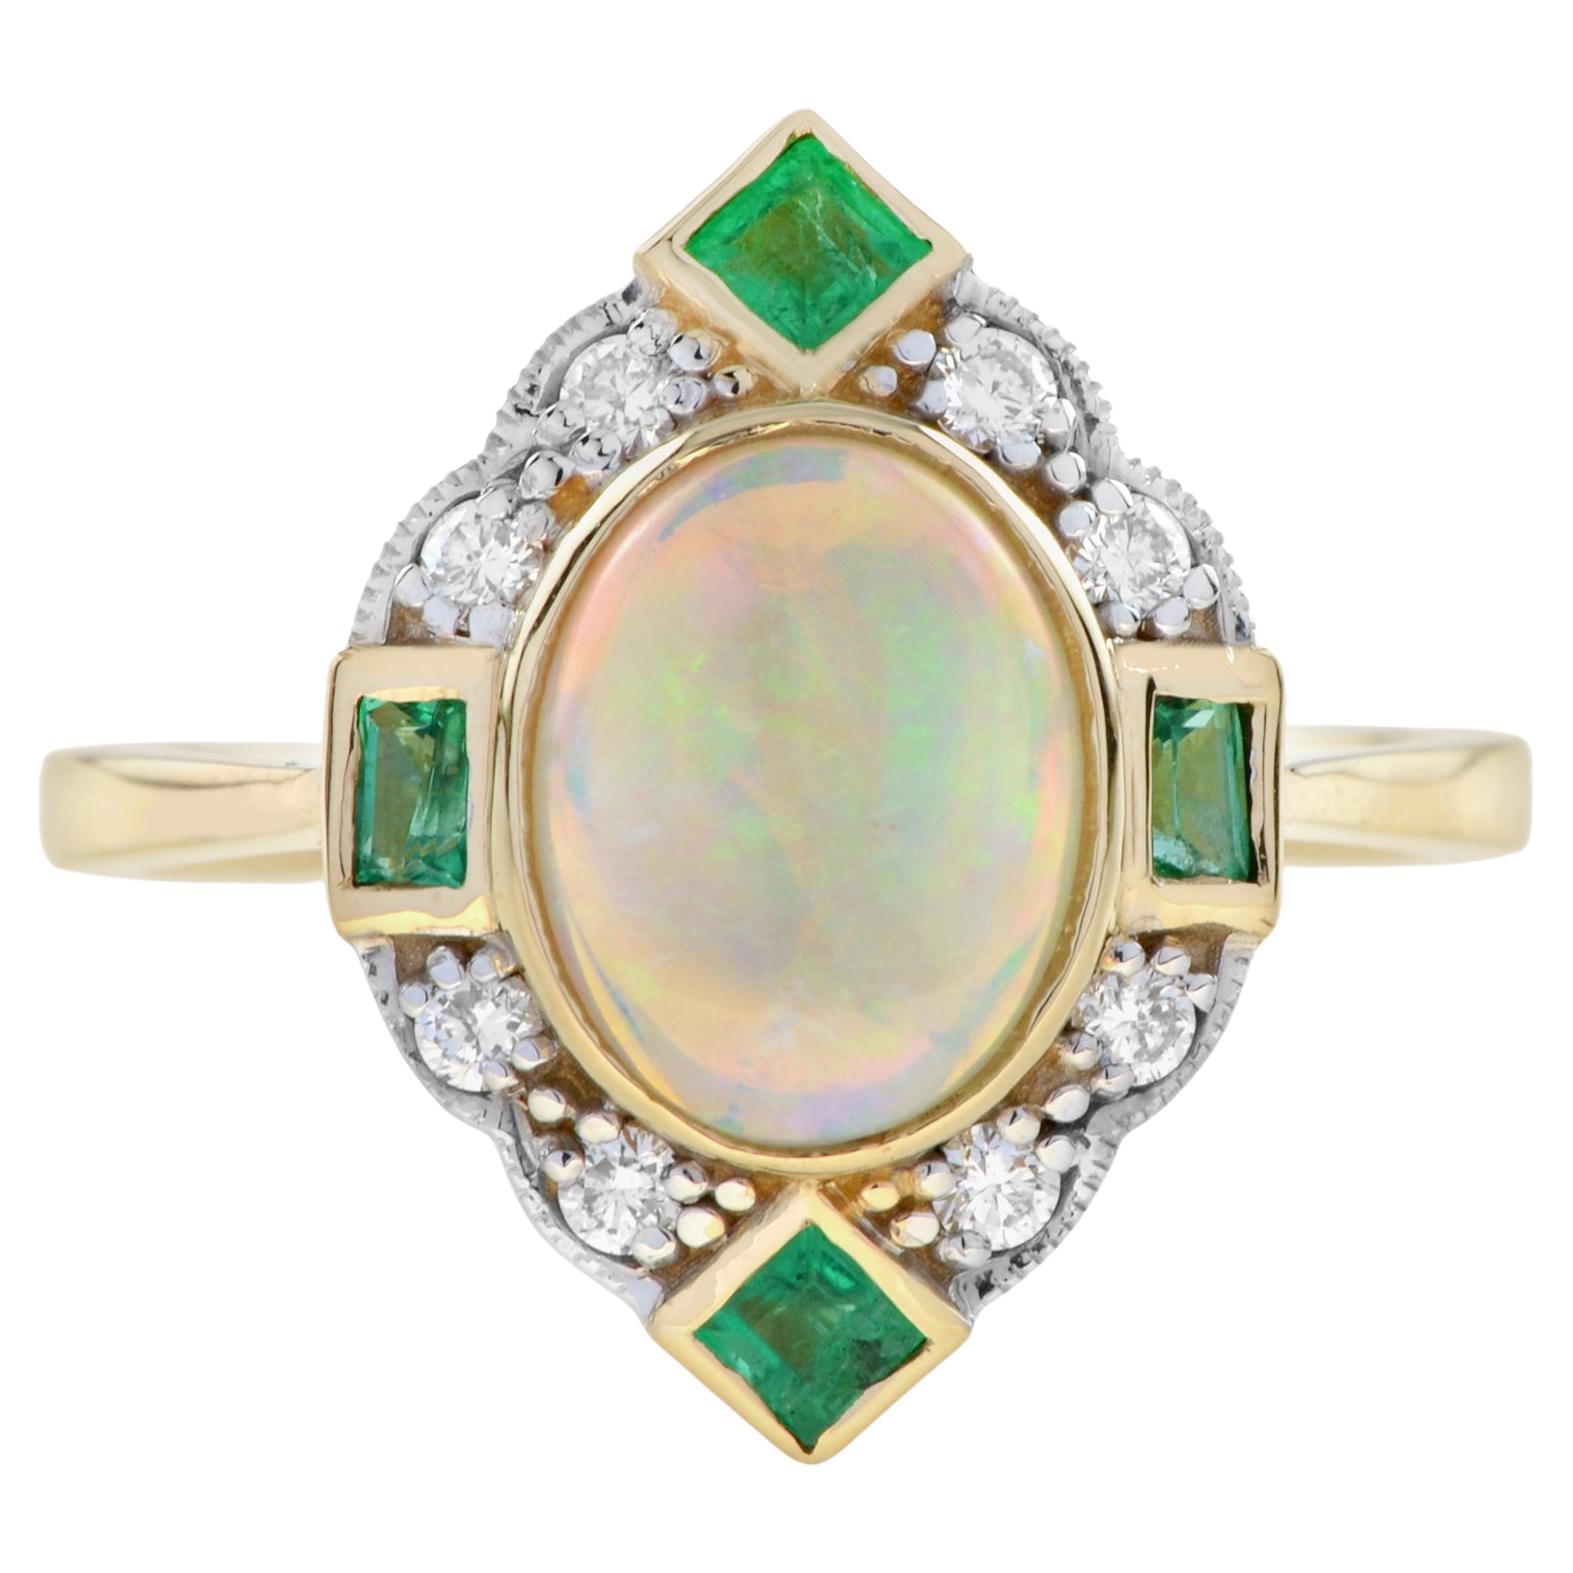 Australian Opal Emerald Diamond Art Deco Style Halo Ring in 14K Yellow Gold